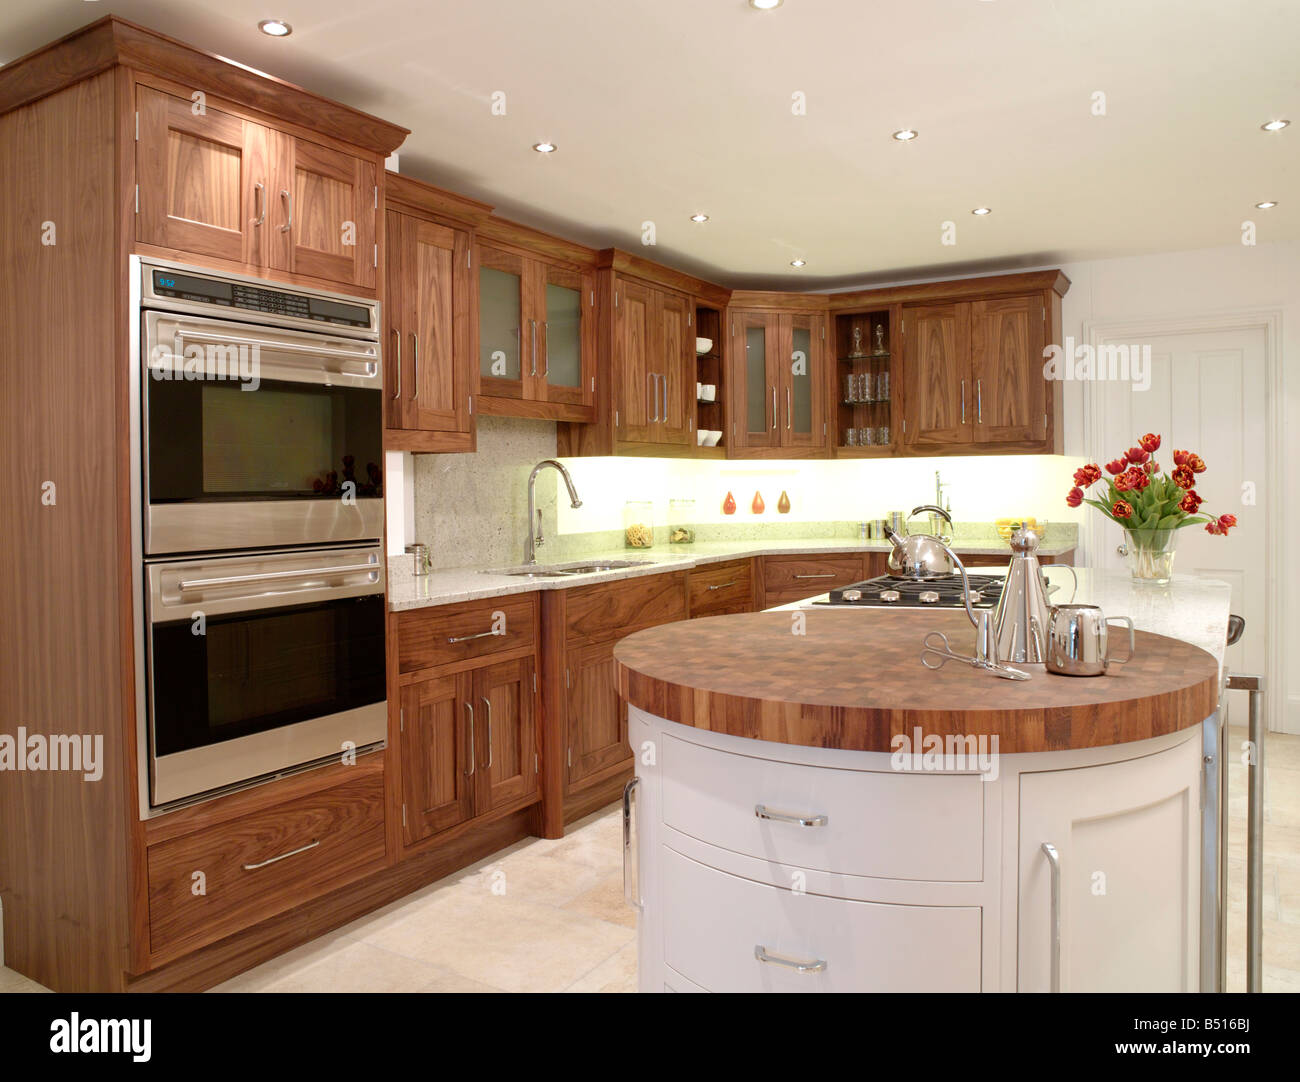 John Ladbury dark wood kitchen with round wood peninsular unit Stock Photo